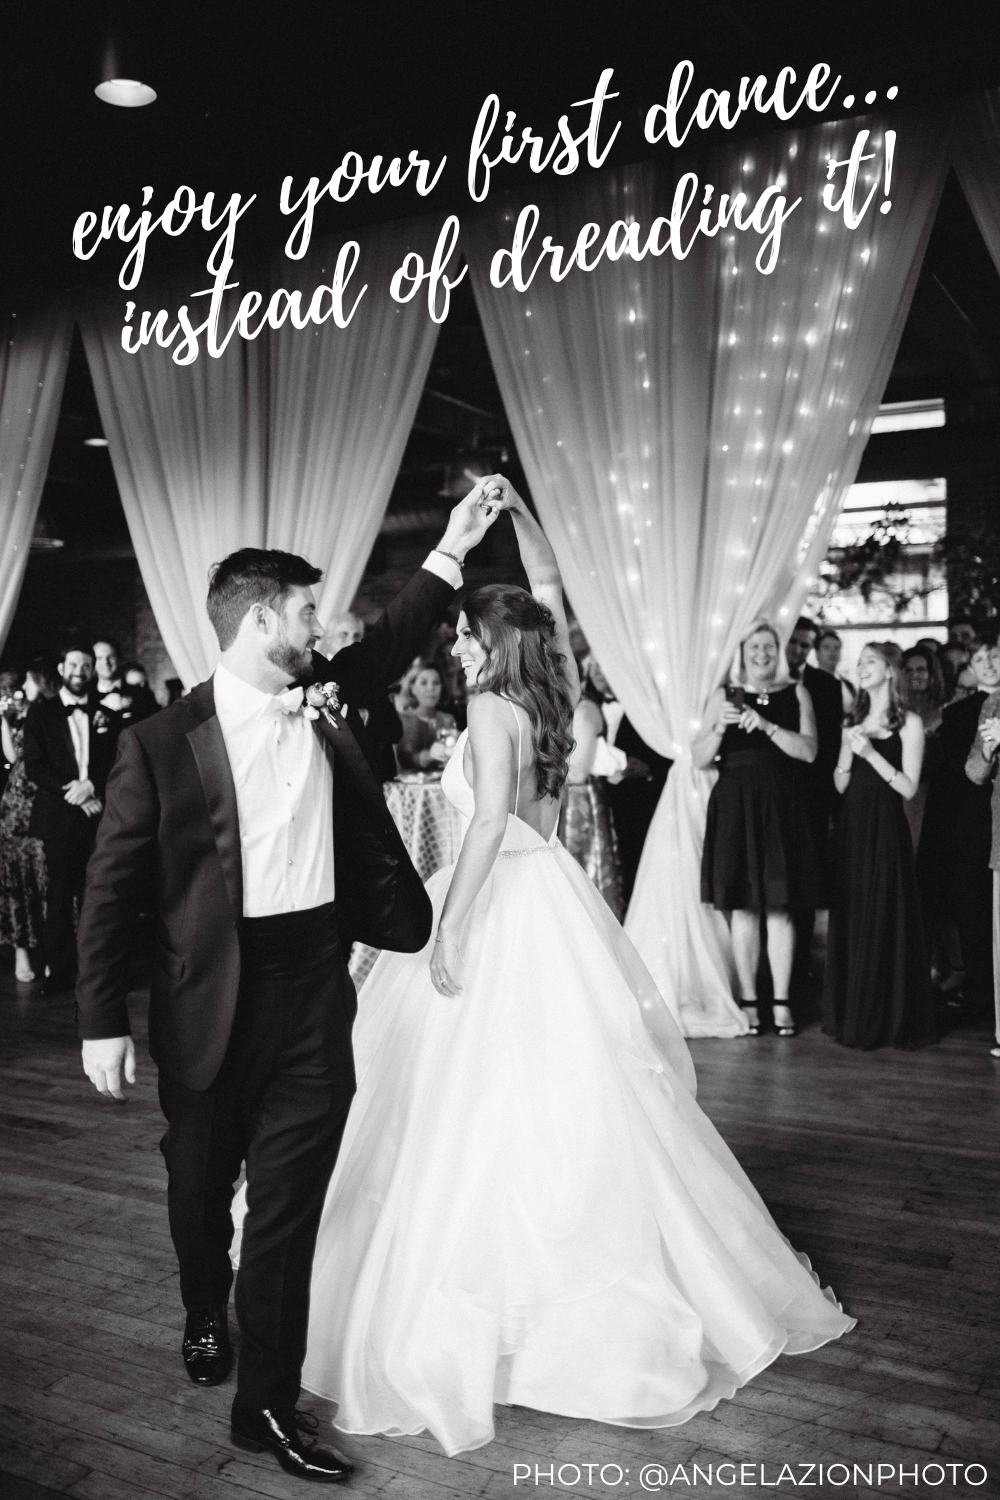 exist for love aurora wedding first dance choreography tutorial for beginners - @angelazionphoto @firstdancecharlotte